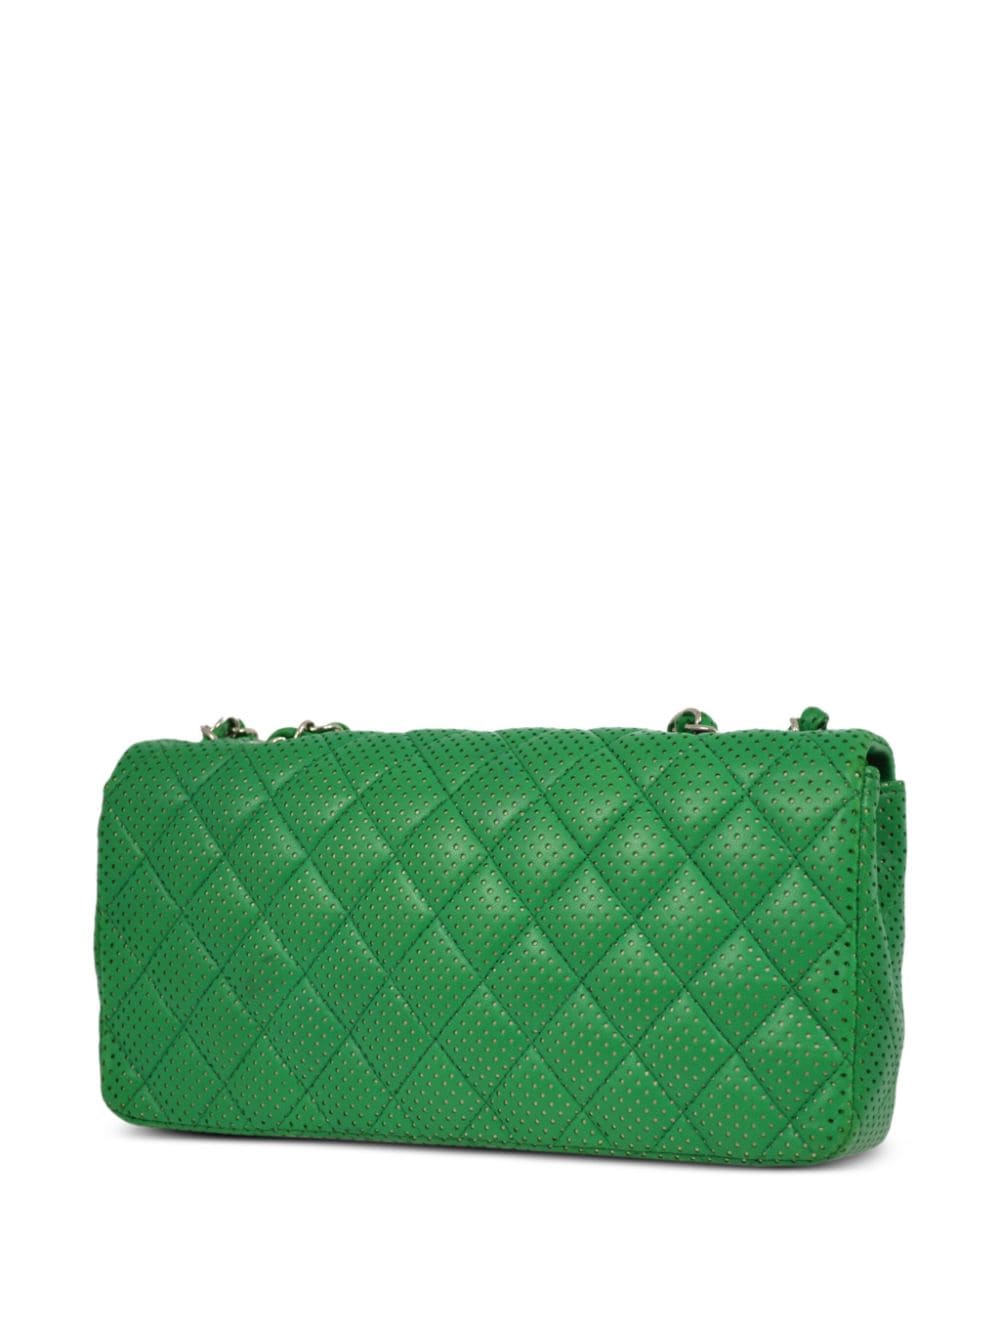 Pre-owned Chanel 2007 East West Shoulder Bag In Green